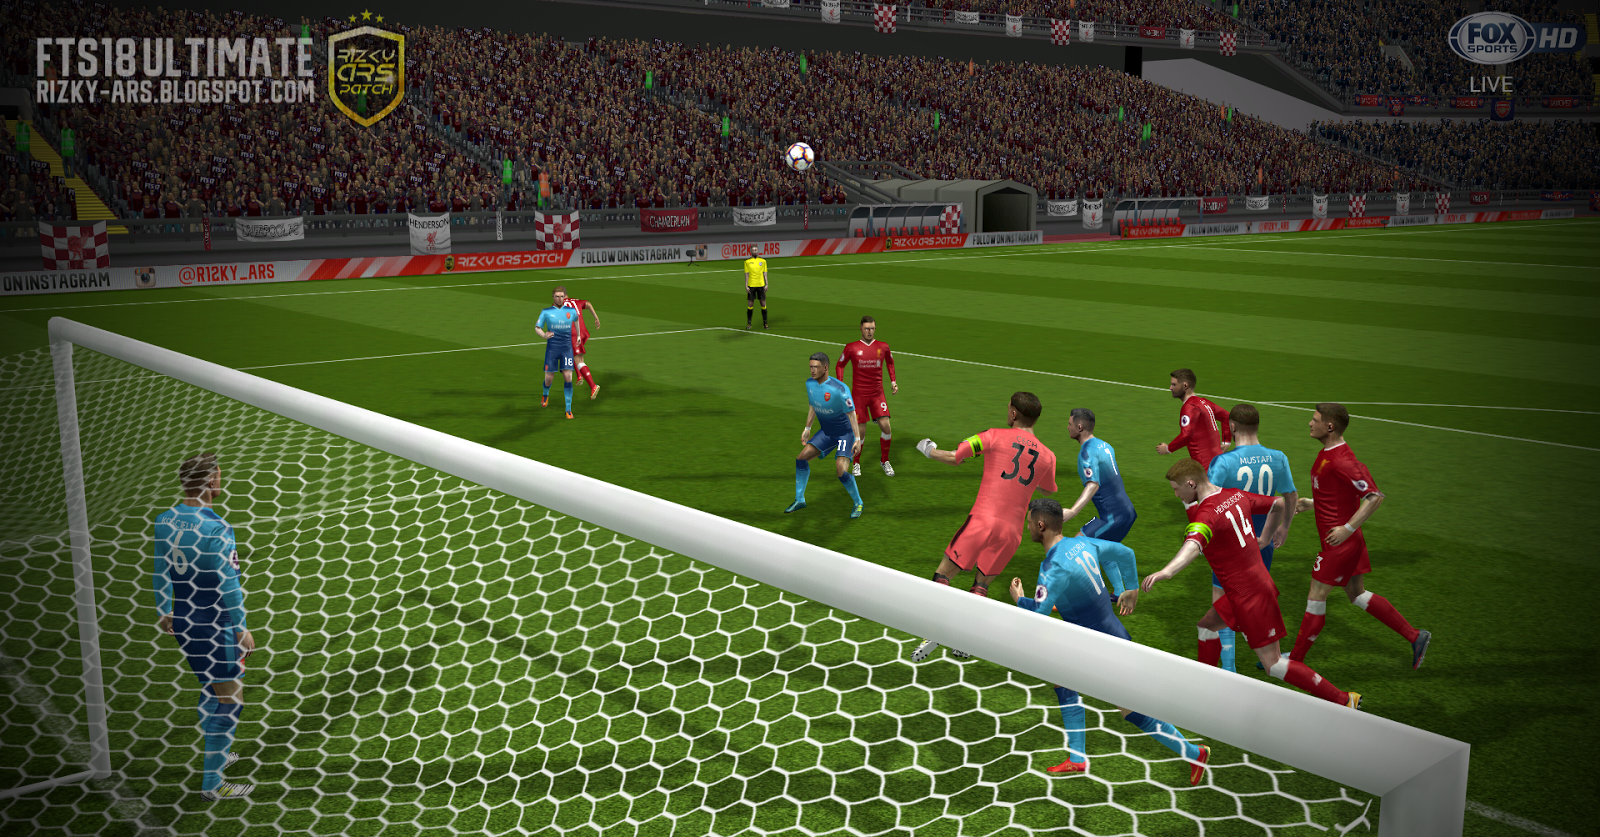 Fts18. Ultimate Soccer Mod APK. Игры 18 на андроид мод